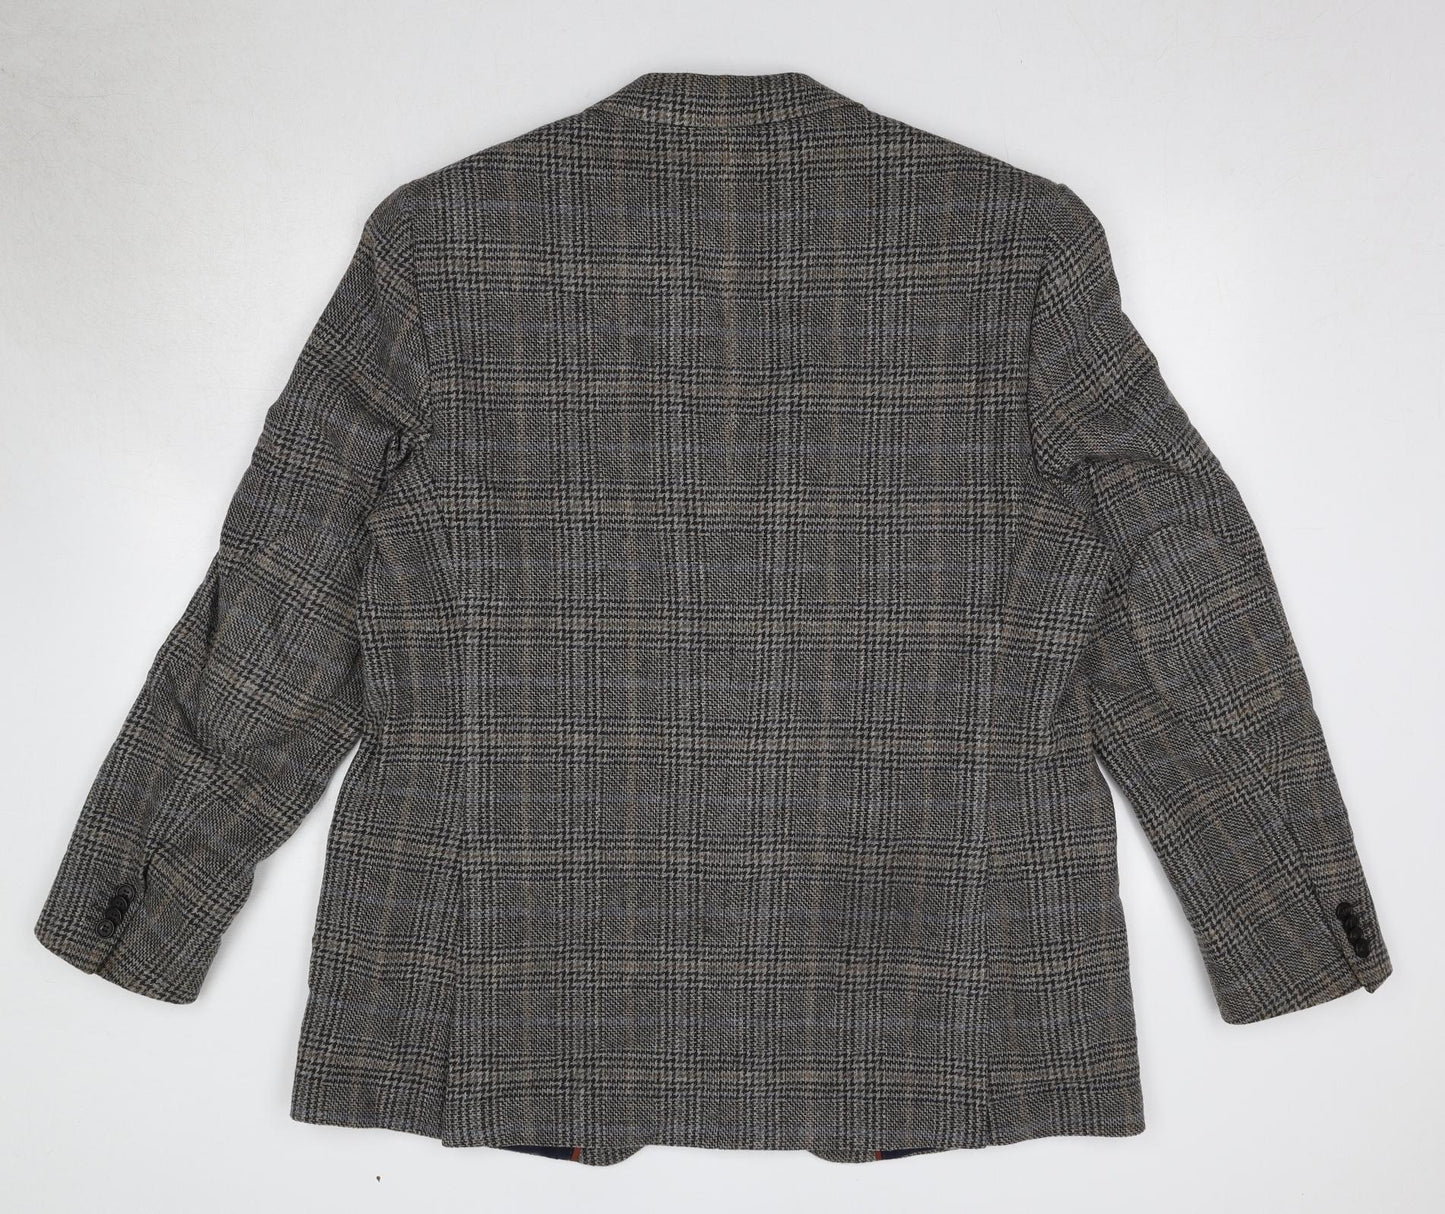 Marks and Spencer Mens Grey Plaid Wool Jacket Suit Jacket Size 46 Regular